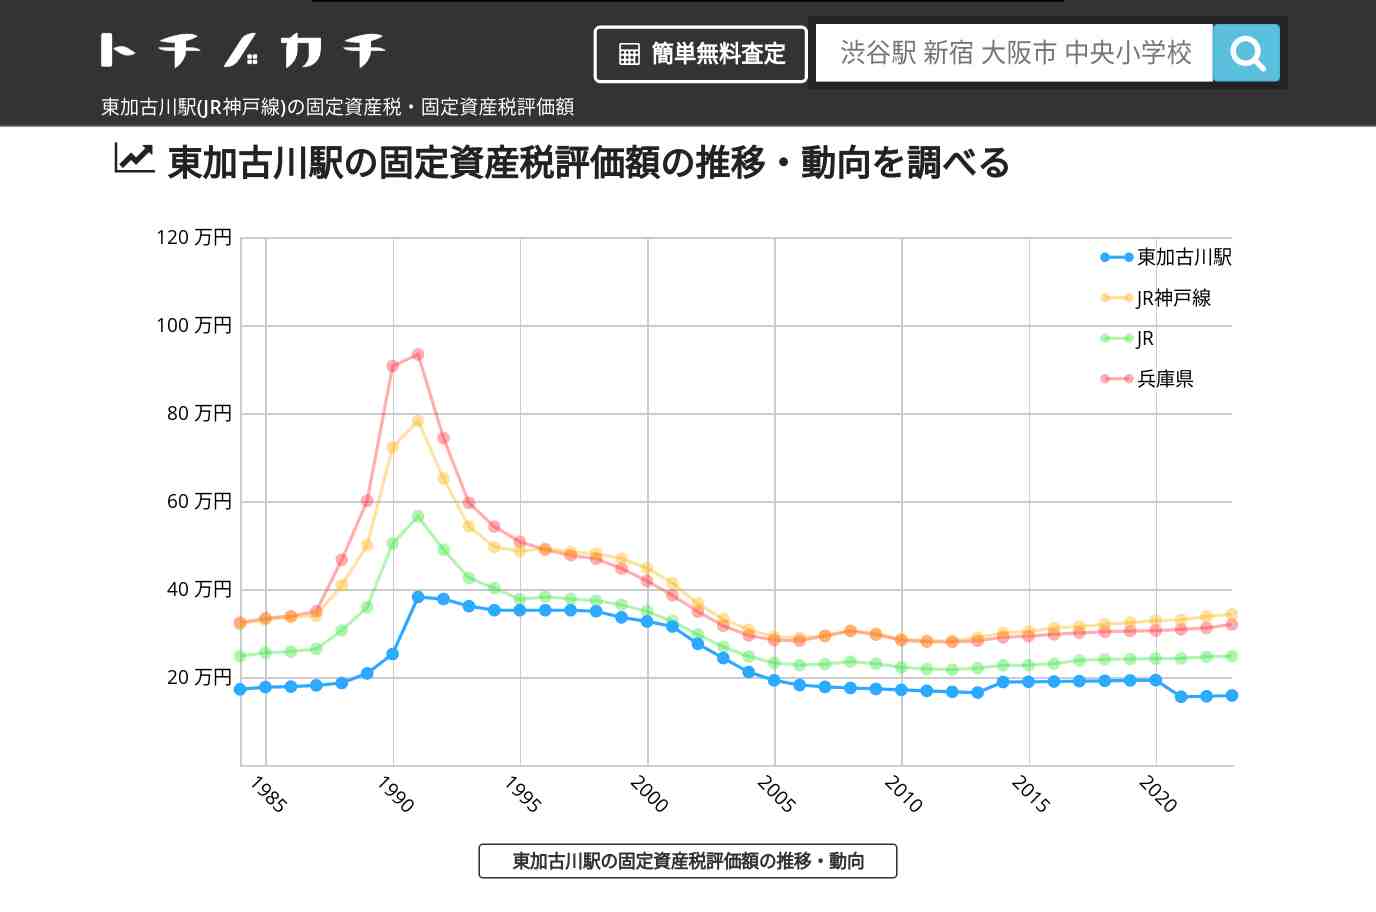 東加古川駅(JR神戸線)の固定資産税・固定資産税評価額 | トチノカチ